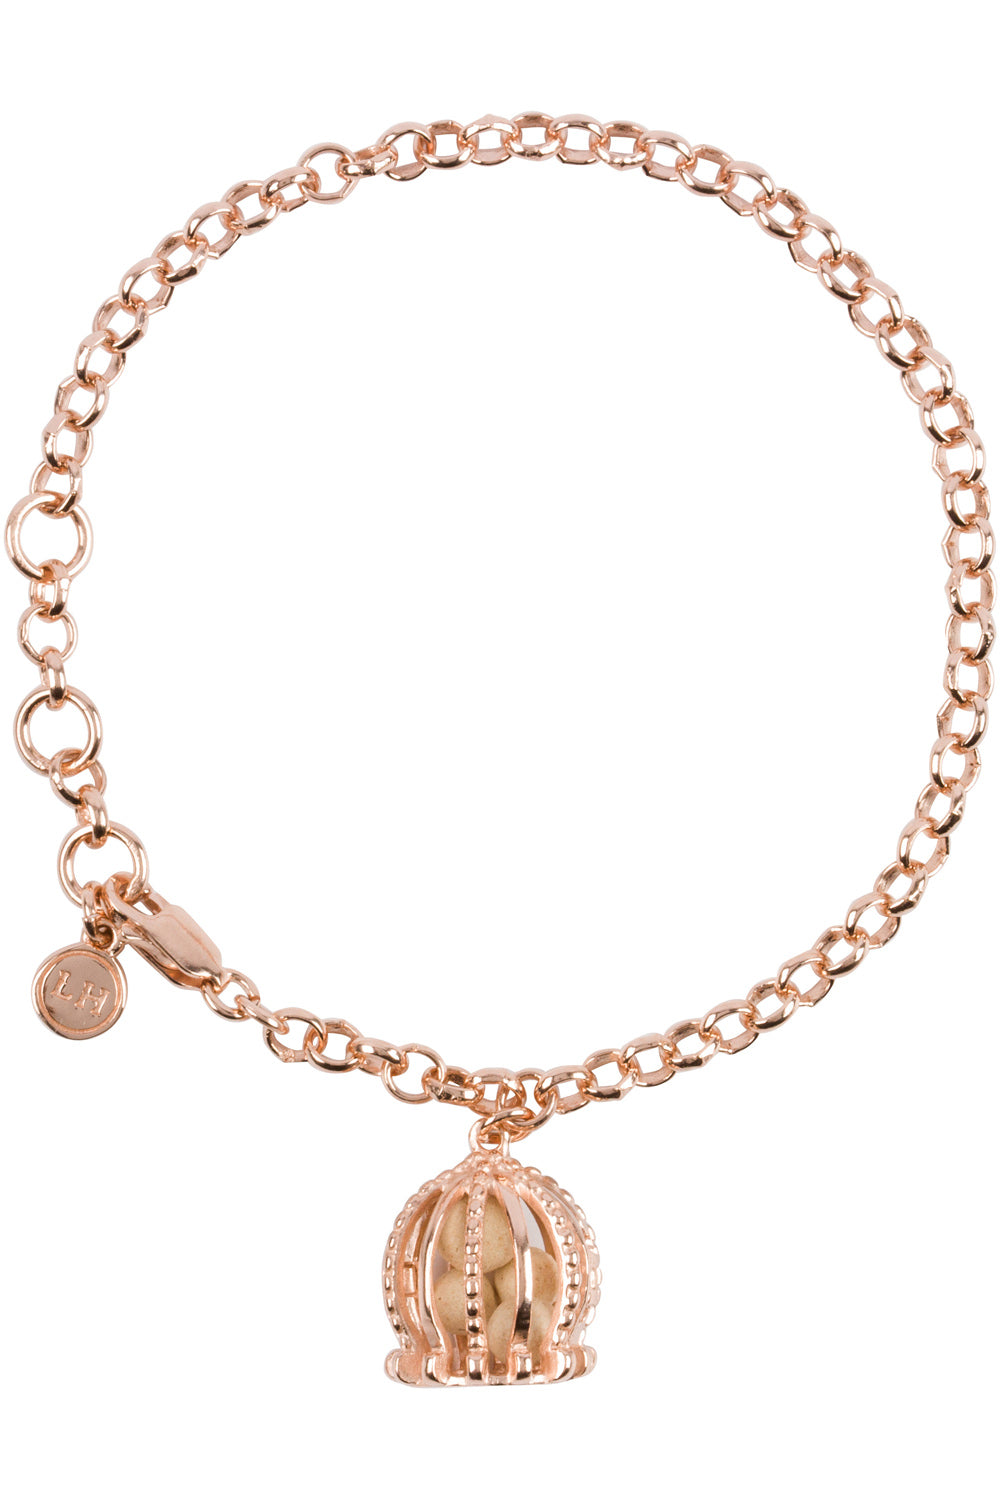 Imperial Charm Bracelet - Rose Gold